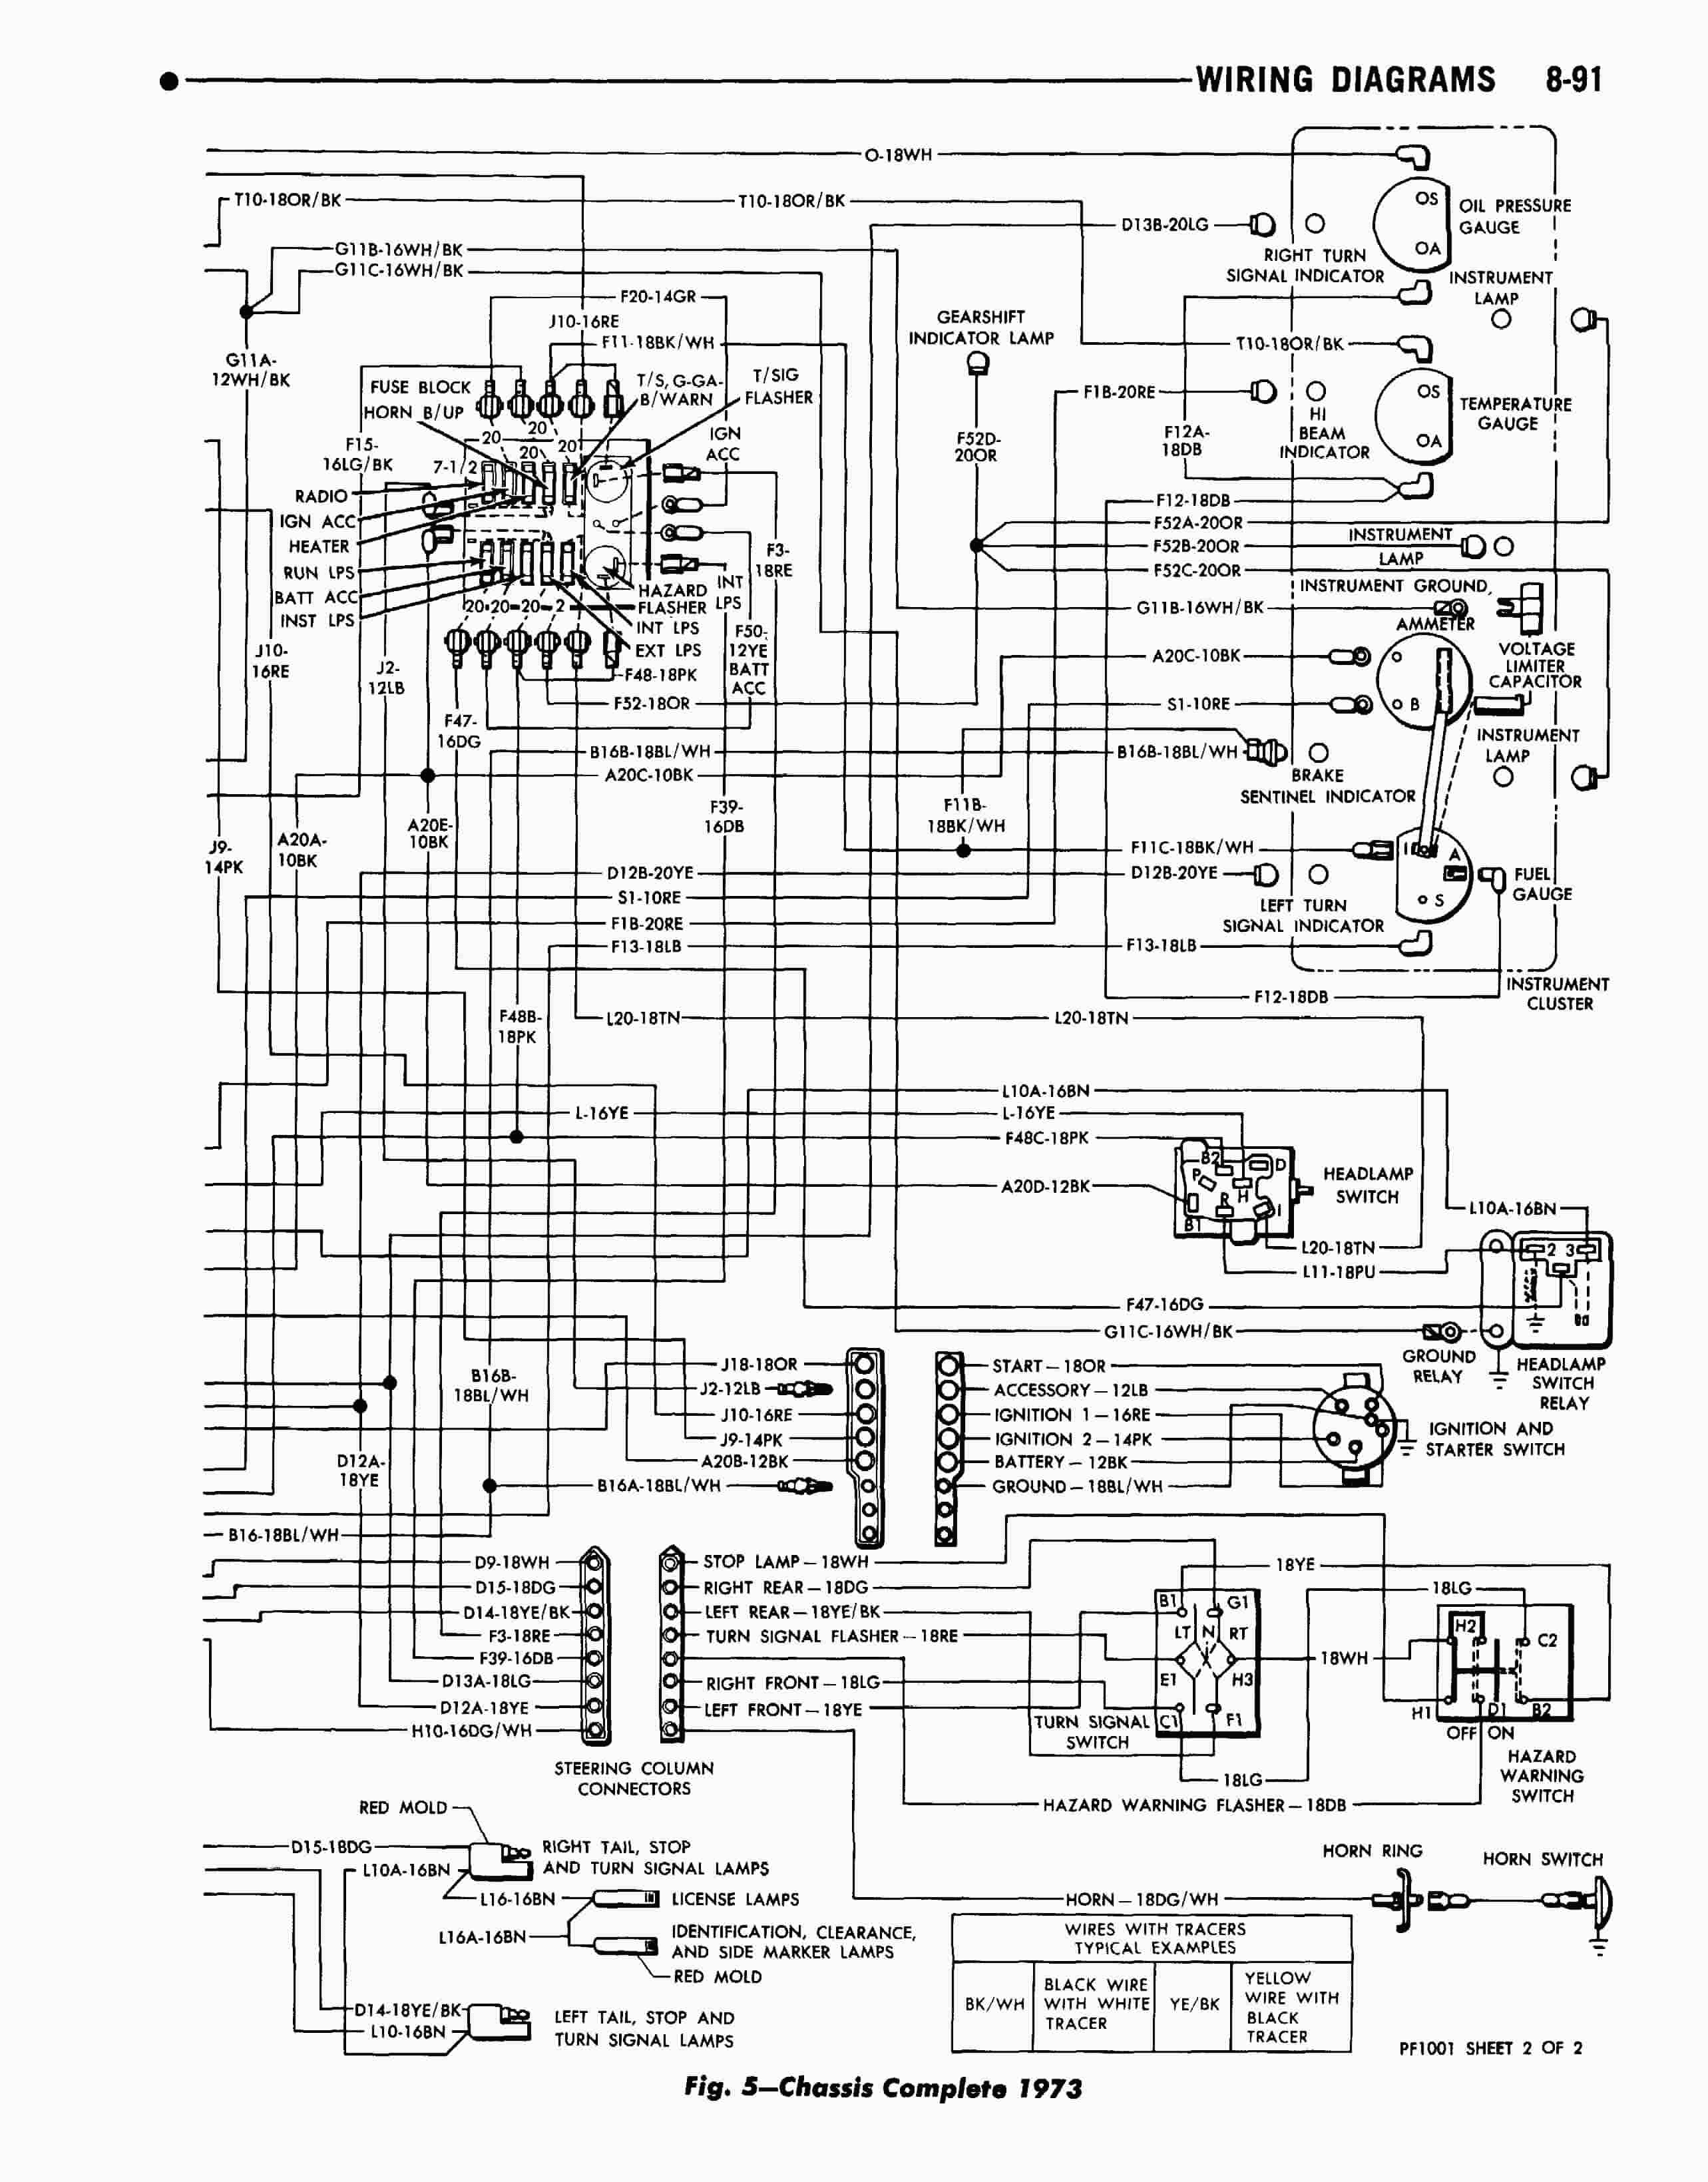 Wiring Diagram 1985 Chevy P30 Van - karen-mycuprunnthover